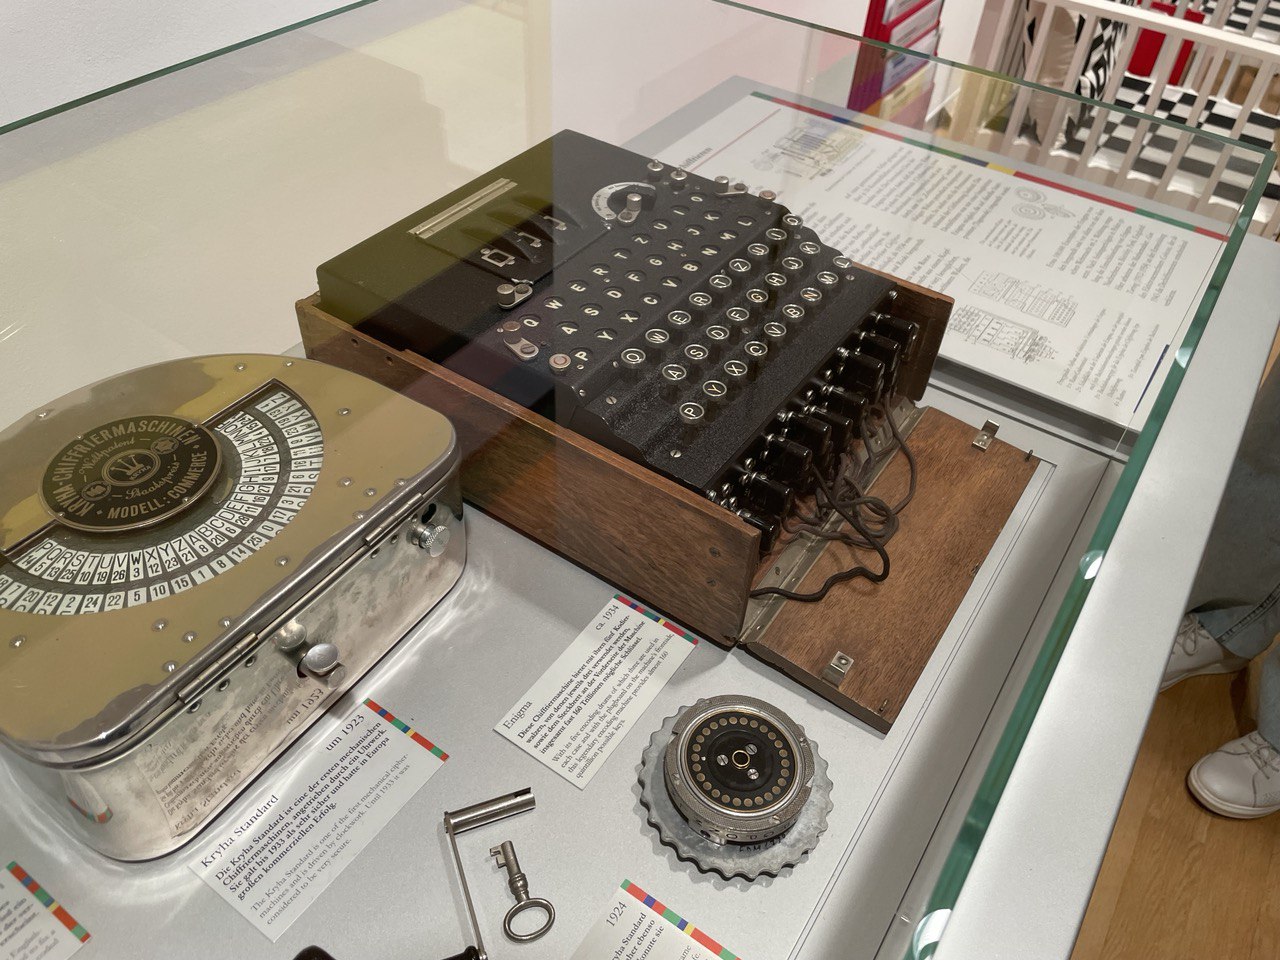 An original Enigma cipher device